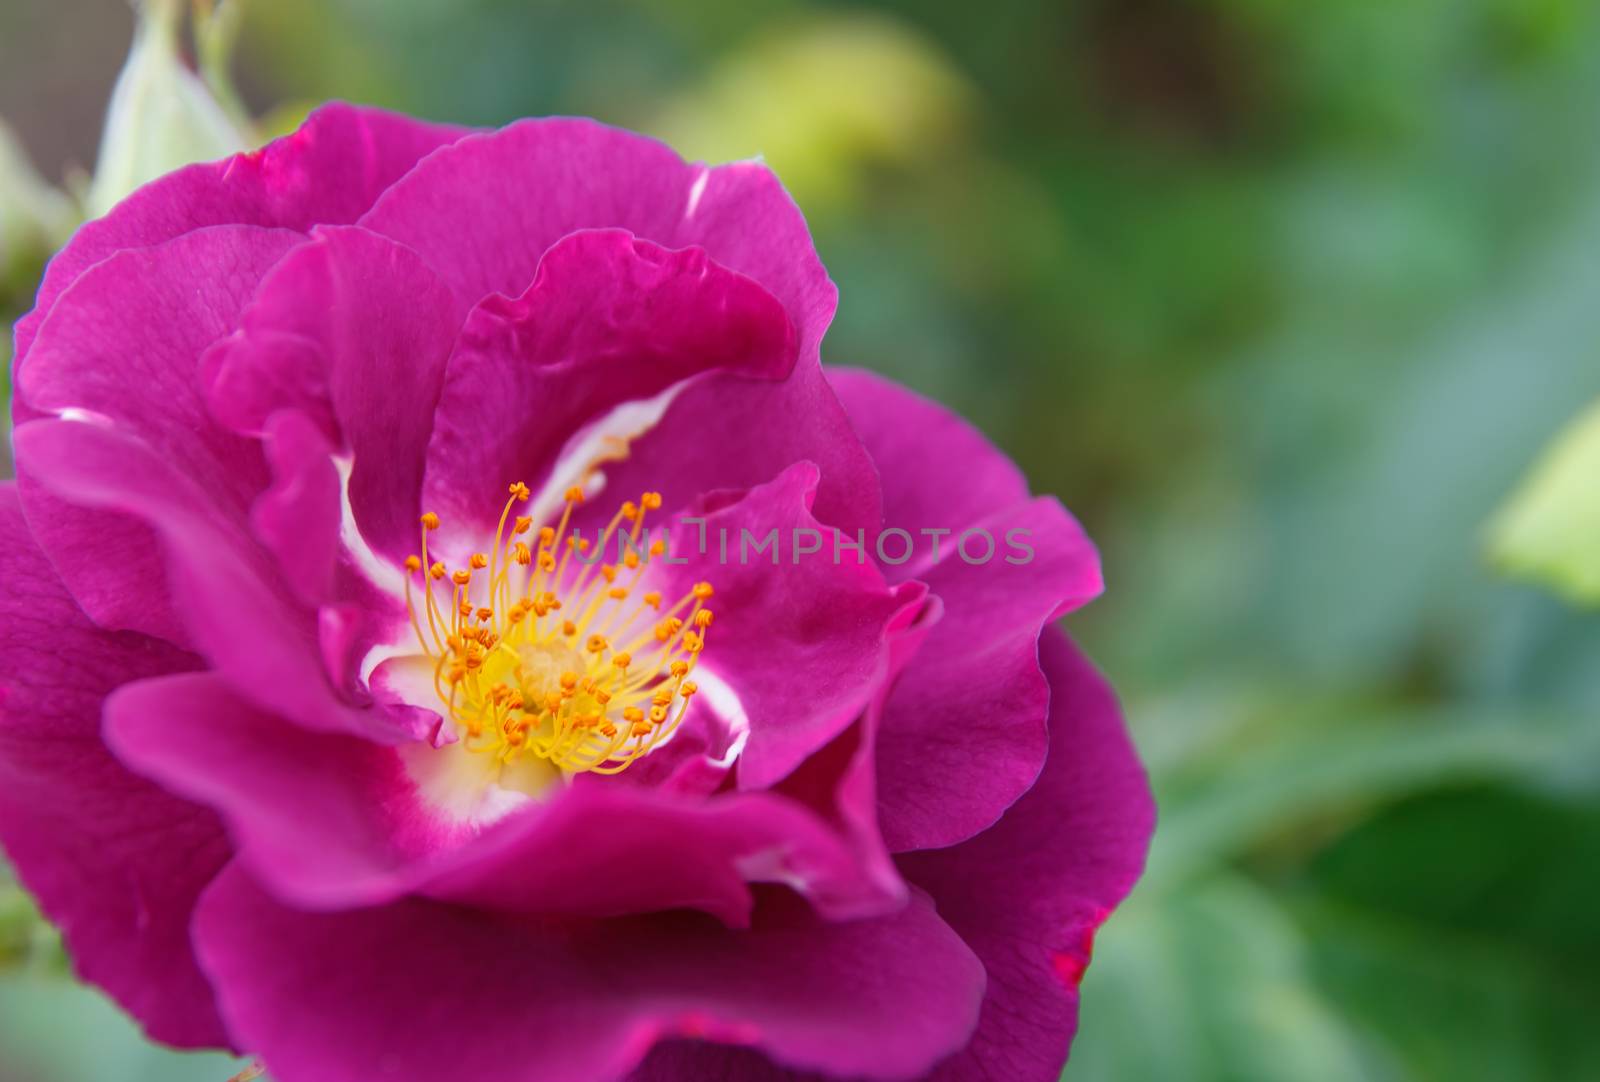 Magenta rose closeup on green background